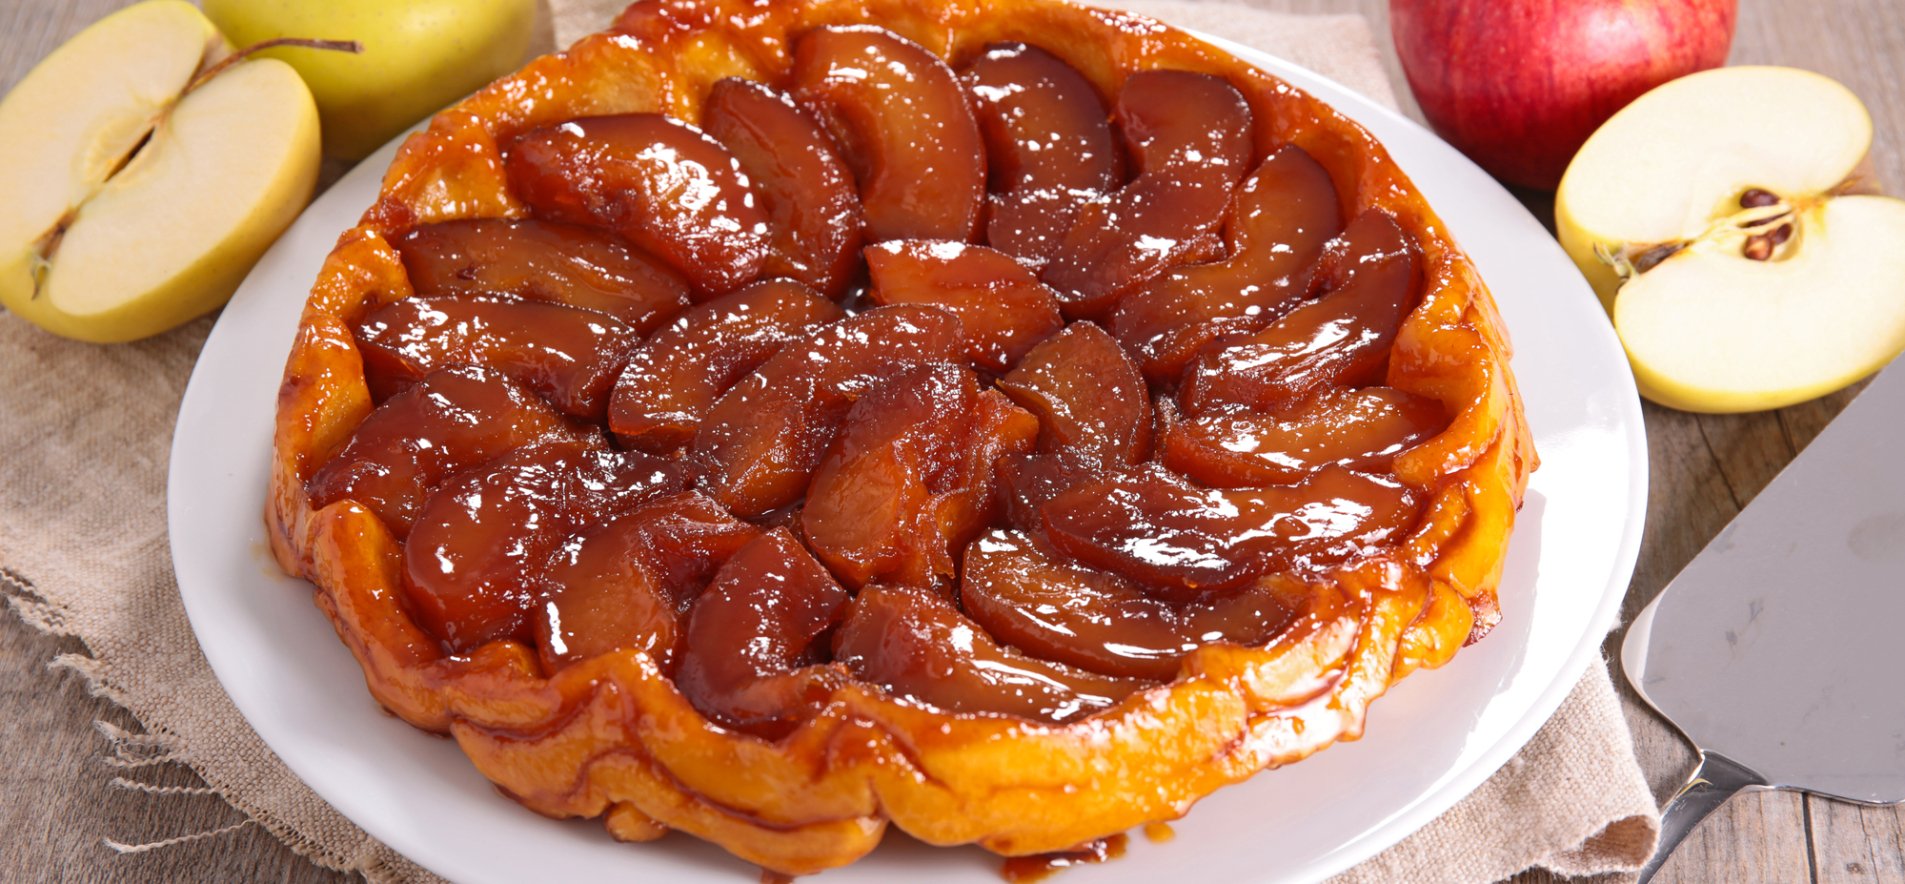 Французский яблочный тарт Татен — рецепт с фото и видео